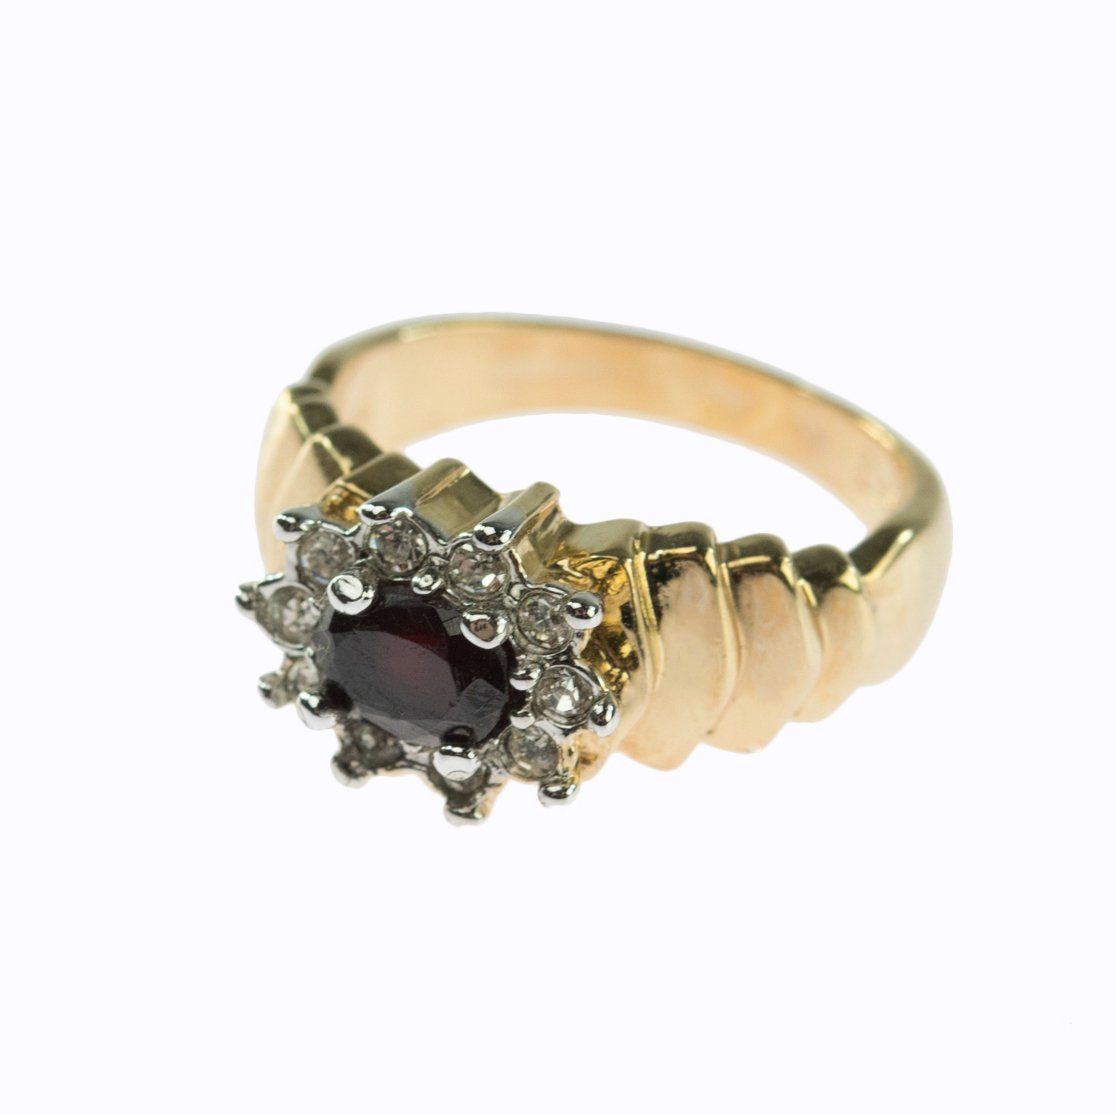 Vintage Ring Genuine Garnet and Clear Swarovski Crystals 18kt Gold Electroplated Band January Birthstone